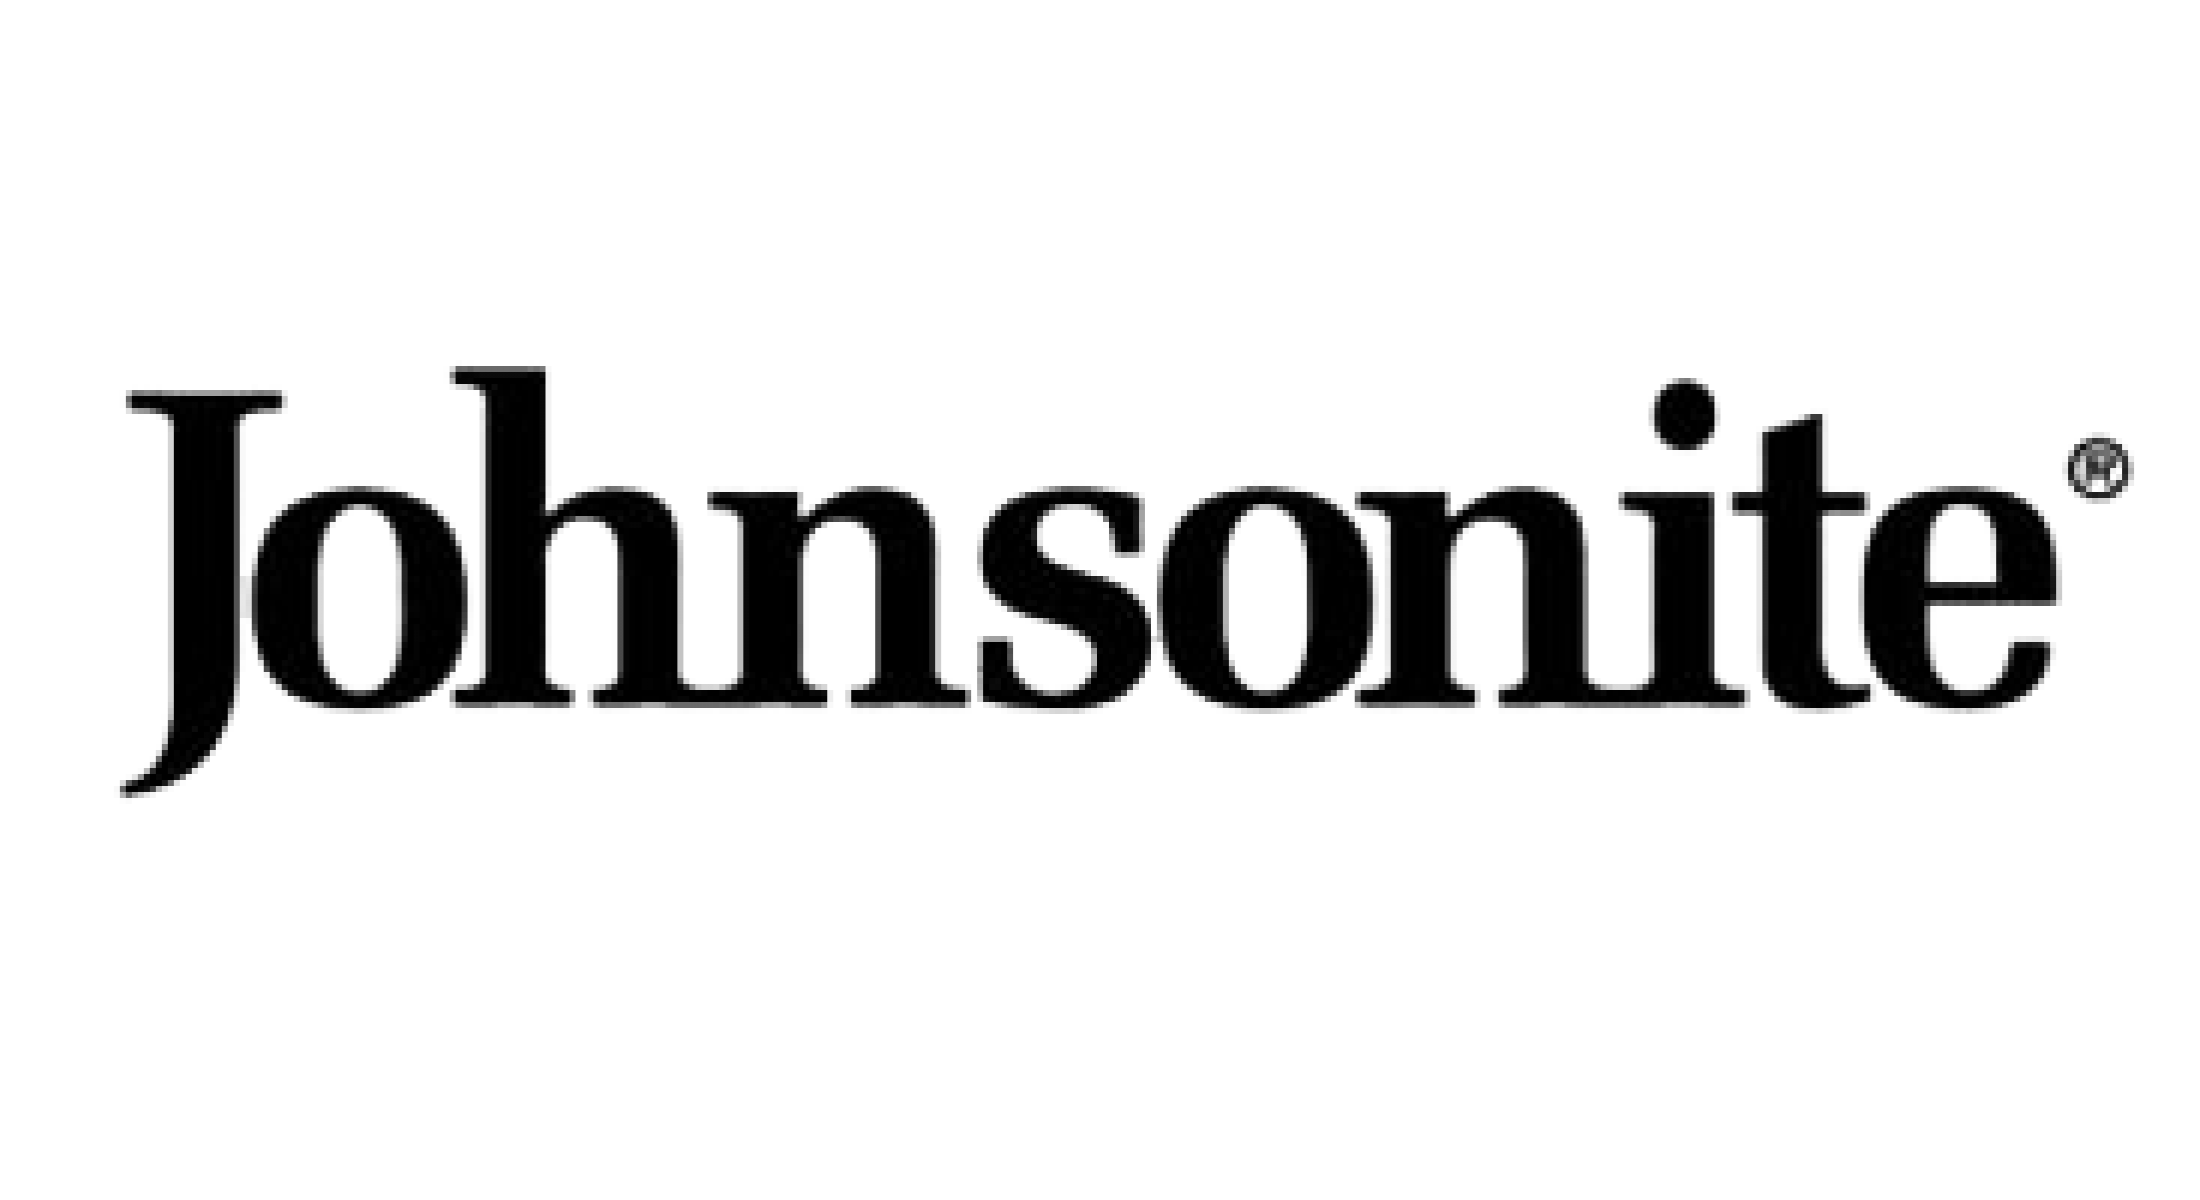 Johnsonite Logo